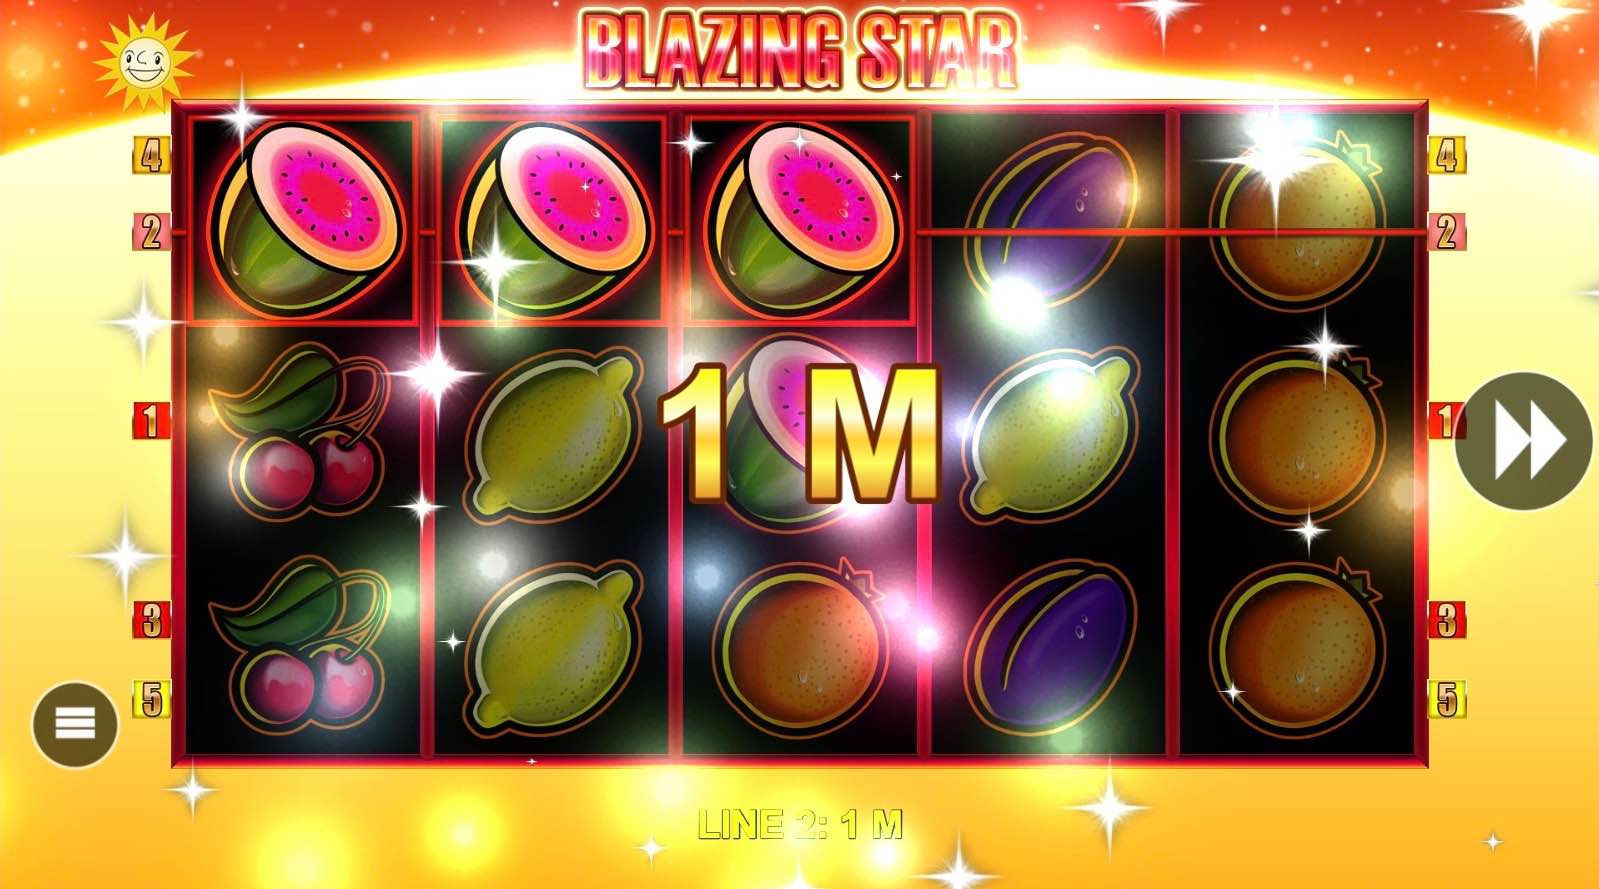 Blazing Star Slot by Rival - 1 million wins